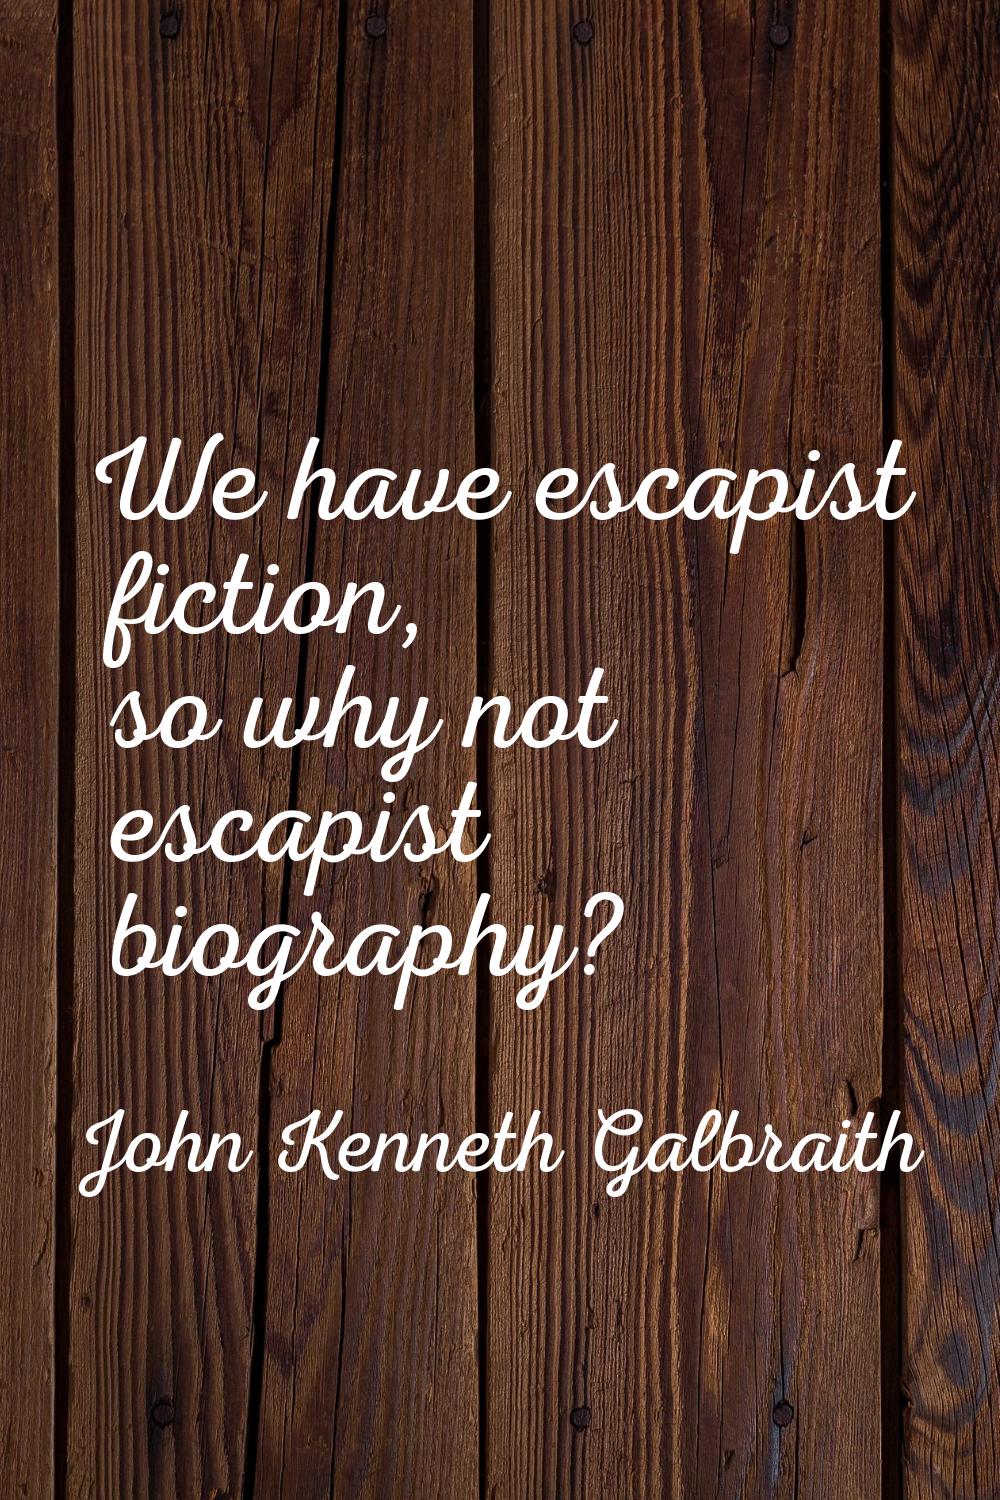 We have escapist fiction, so why not escapist biography?